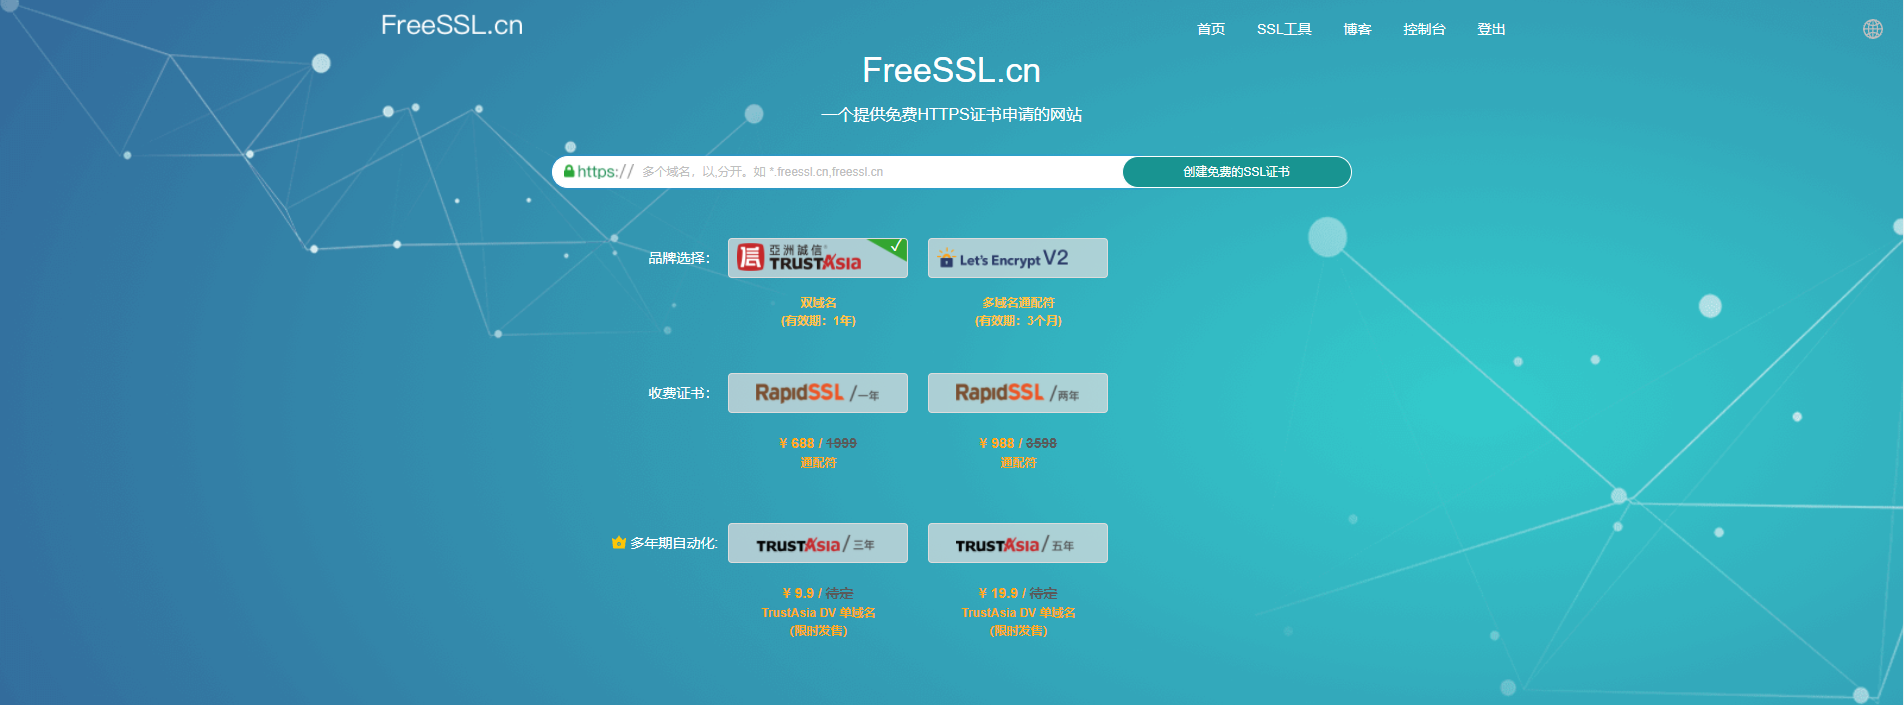 FreeSSL - 免费 SSL 证书申请